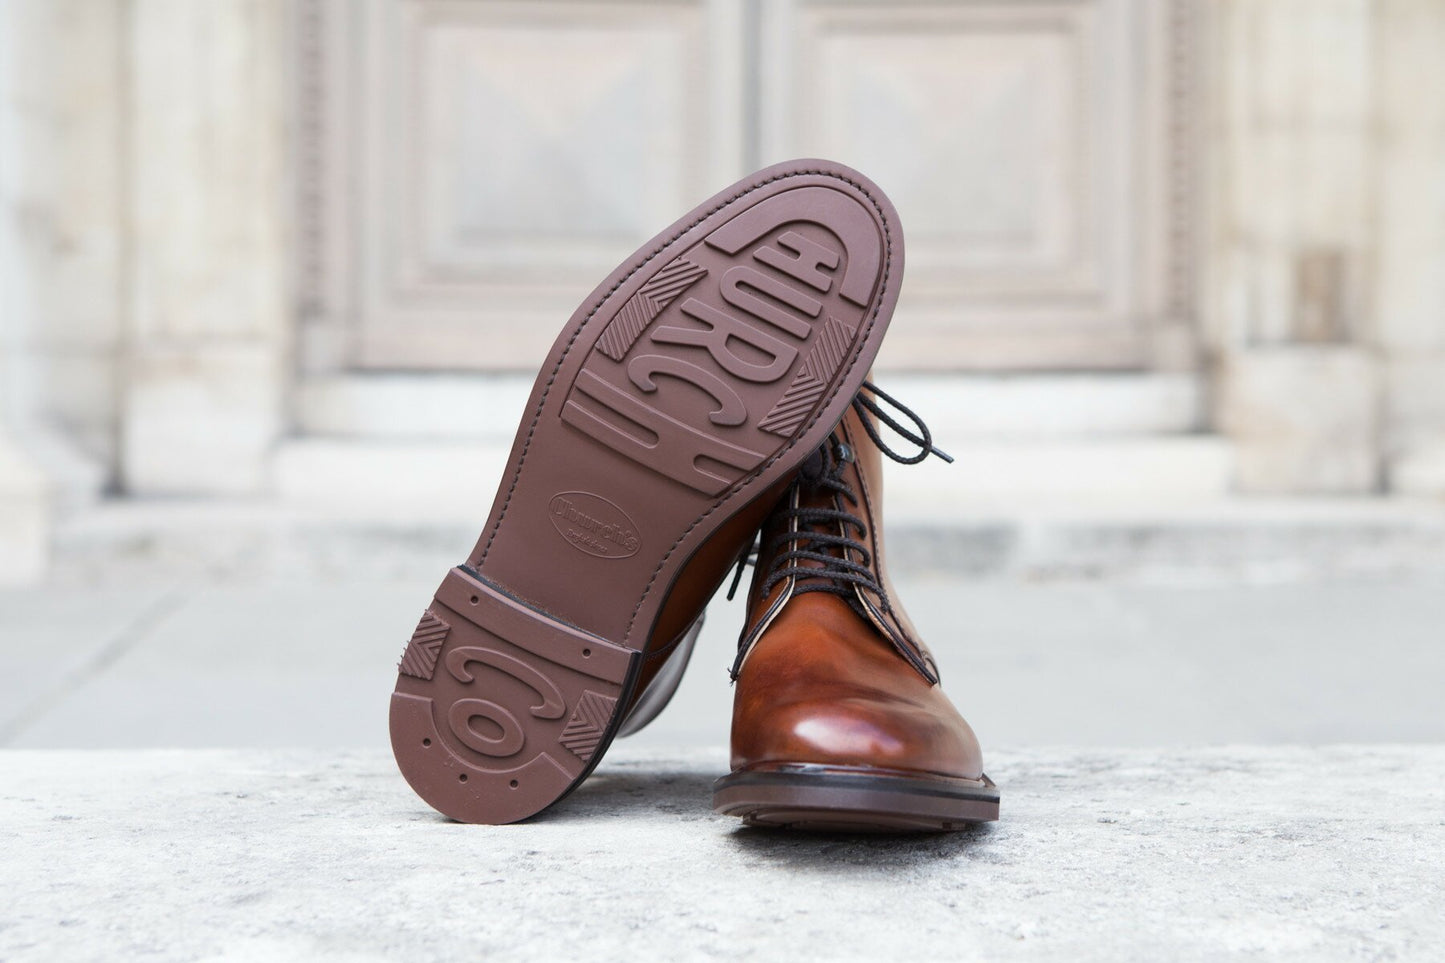 Church's - Boots cuir couleur marron brandy semelle gomme cousue goodyear